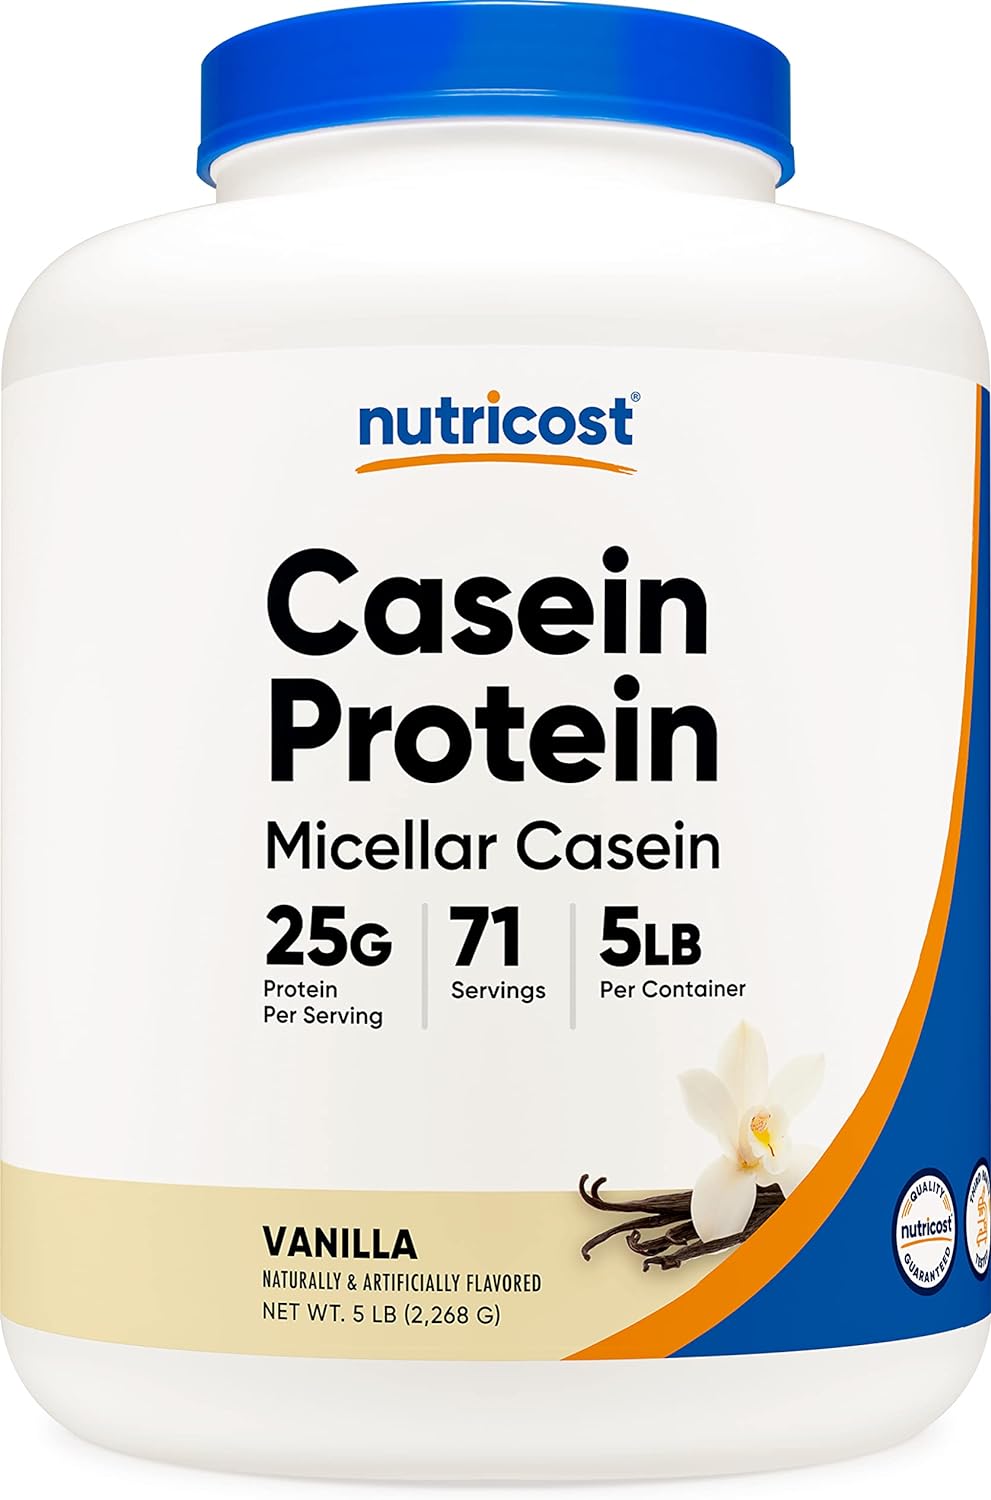 eSupplements via Amazon.com: Nutricost Casein Protein Powder 5lb Vanilla - Micellar Casein, Gluten Free, Non-GMO : Health & Household $46/each $96.41 for 2